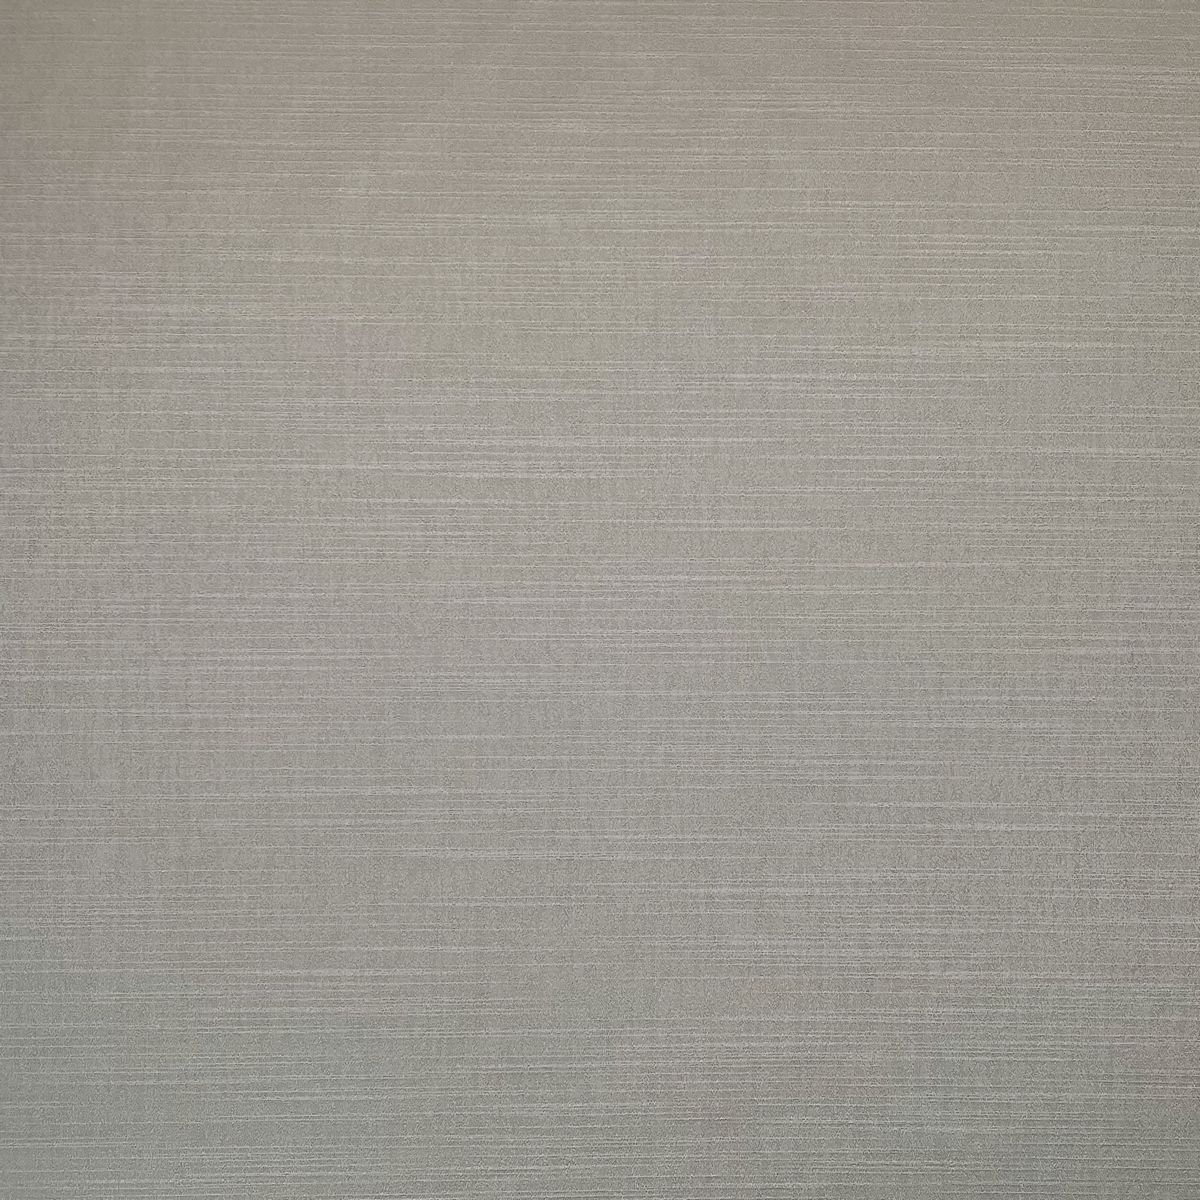 Allure Granite Fabric by Chatham Glyn